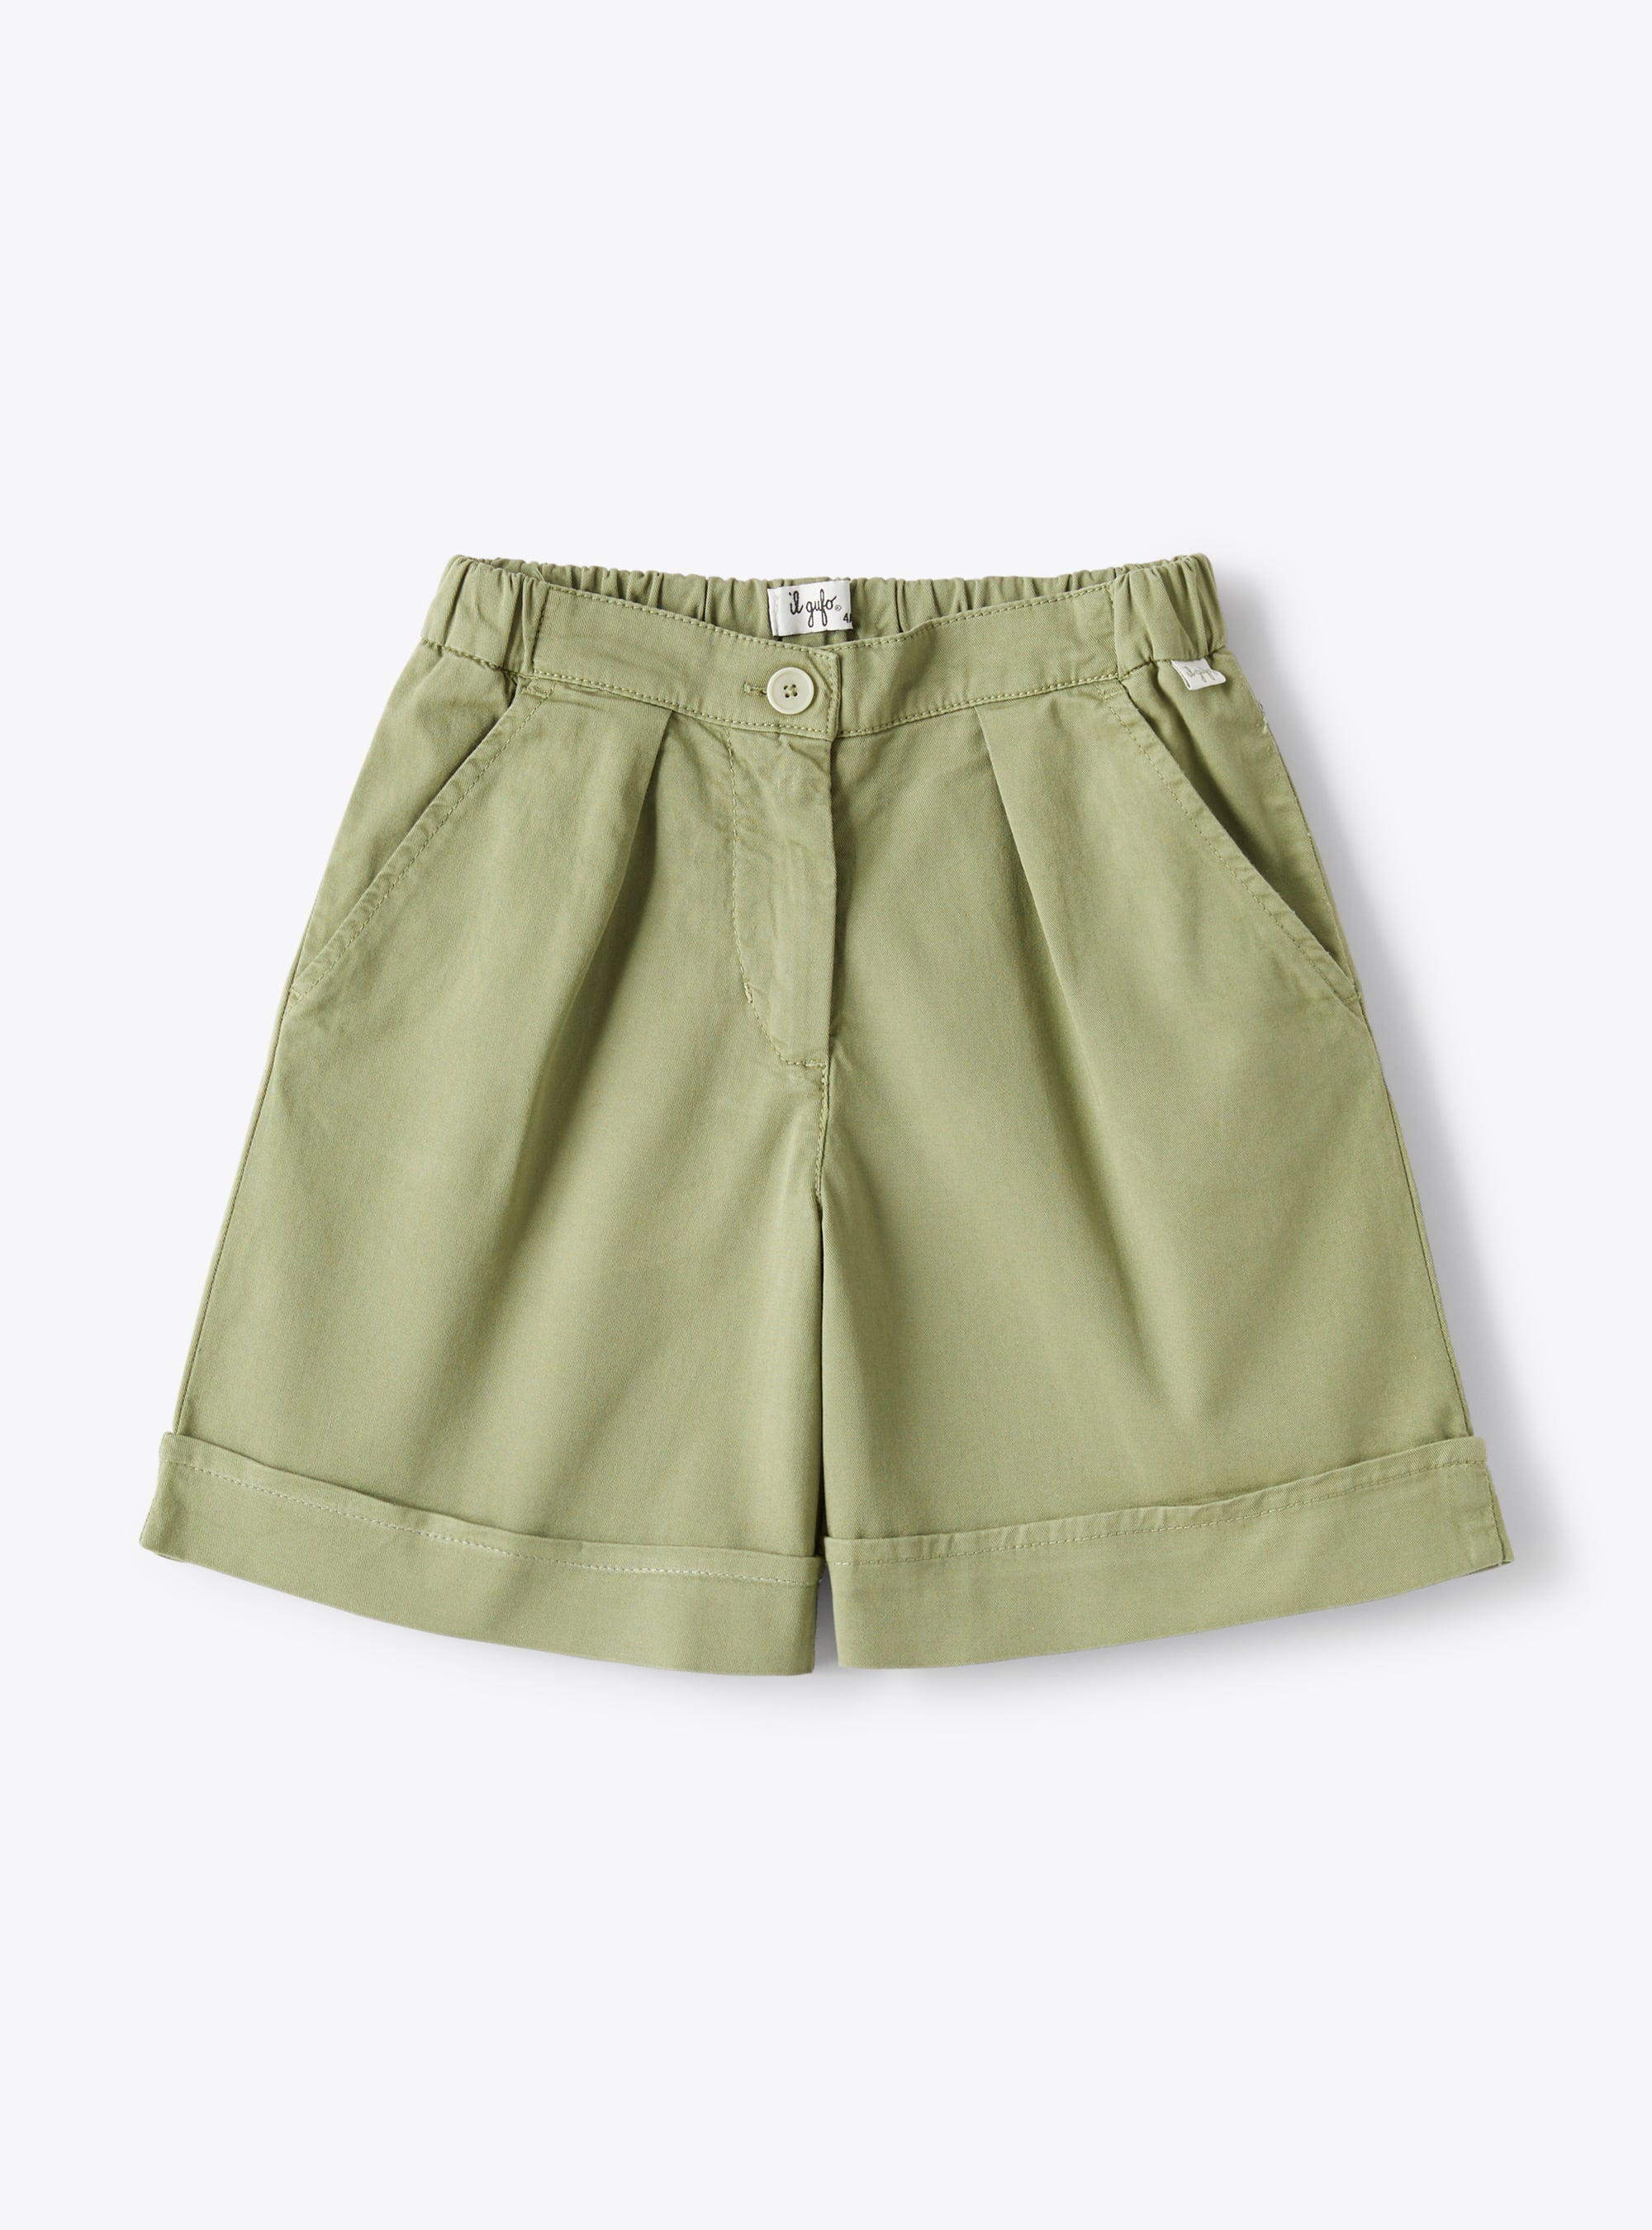 Bermuda shorts in sage-green stretch gabardine - Trousers - Il Gufo